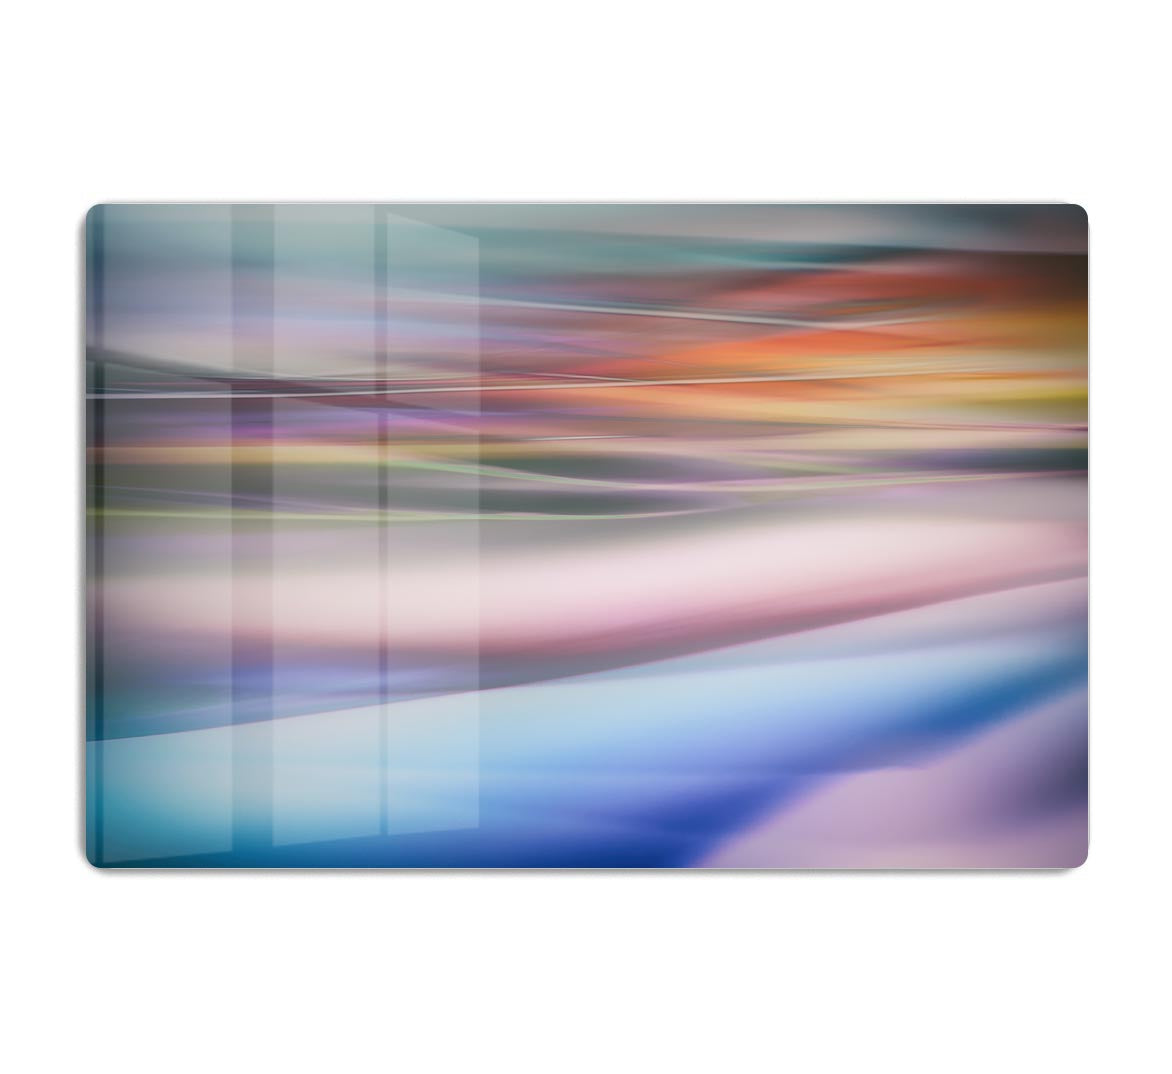 Coloured Waves 2 HD Metal Print - Canvas Art Rocks - 1